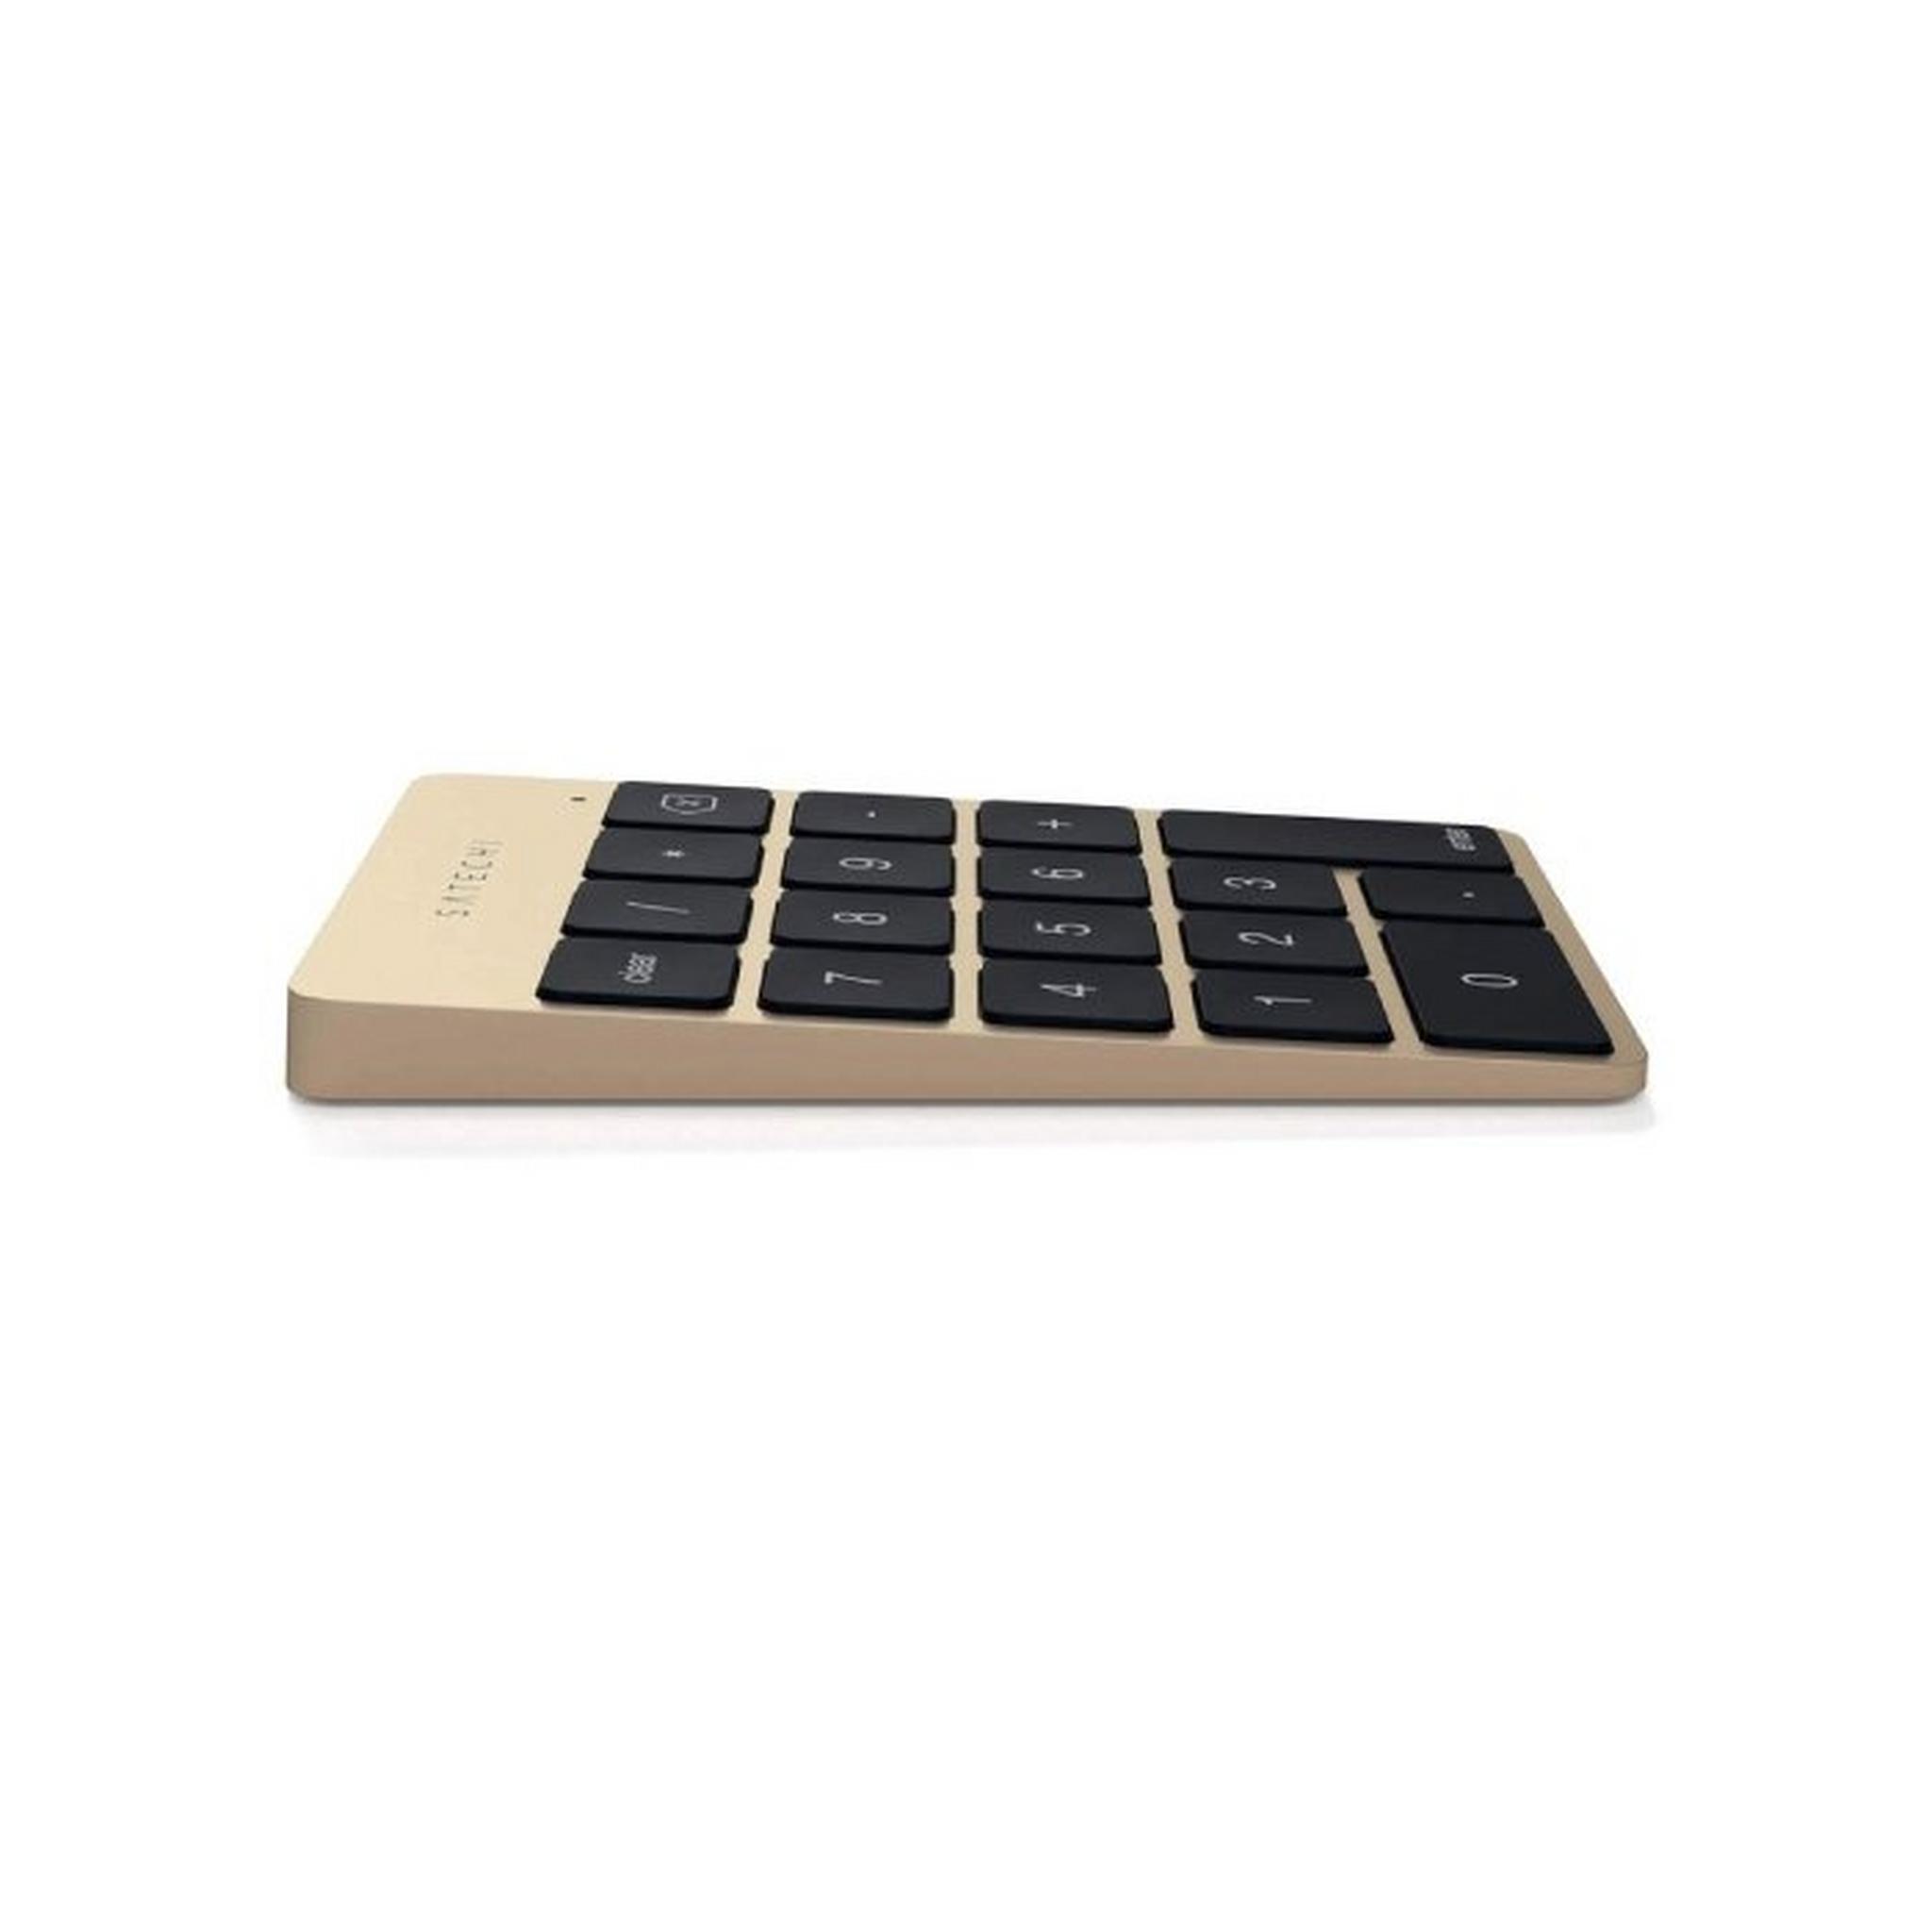 Satechi Slim Wireless Keypad - Gold